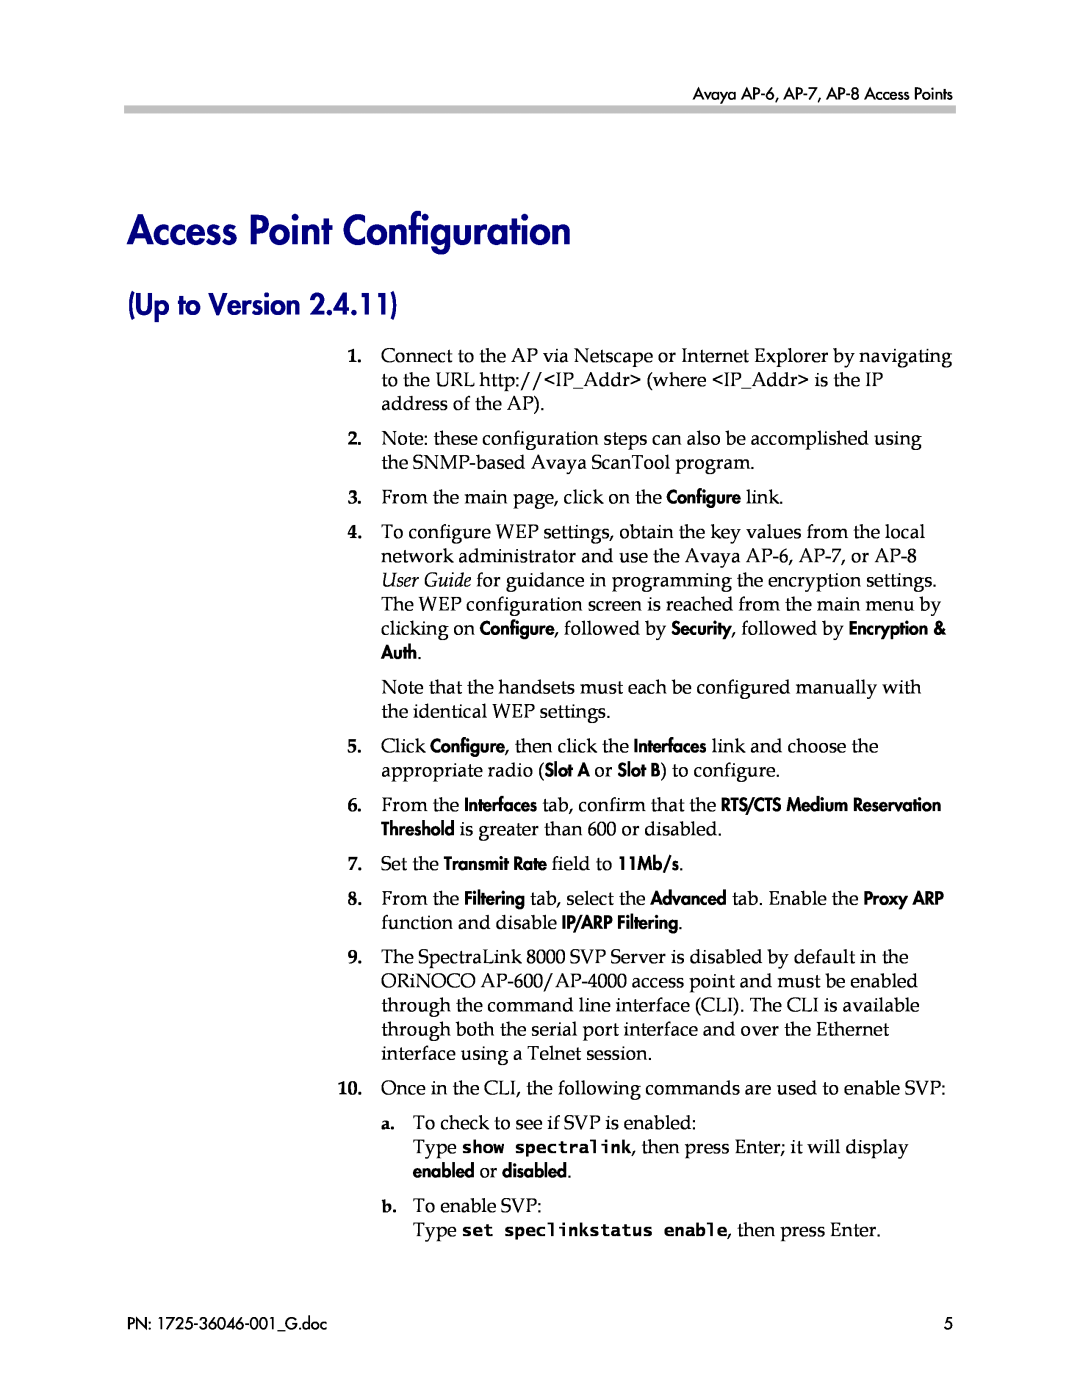 Polycom AP-6, AP-7, AP-8 manual Access Point Configuration, Up to Version 